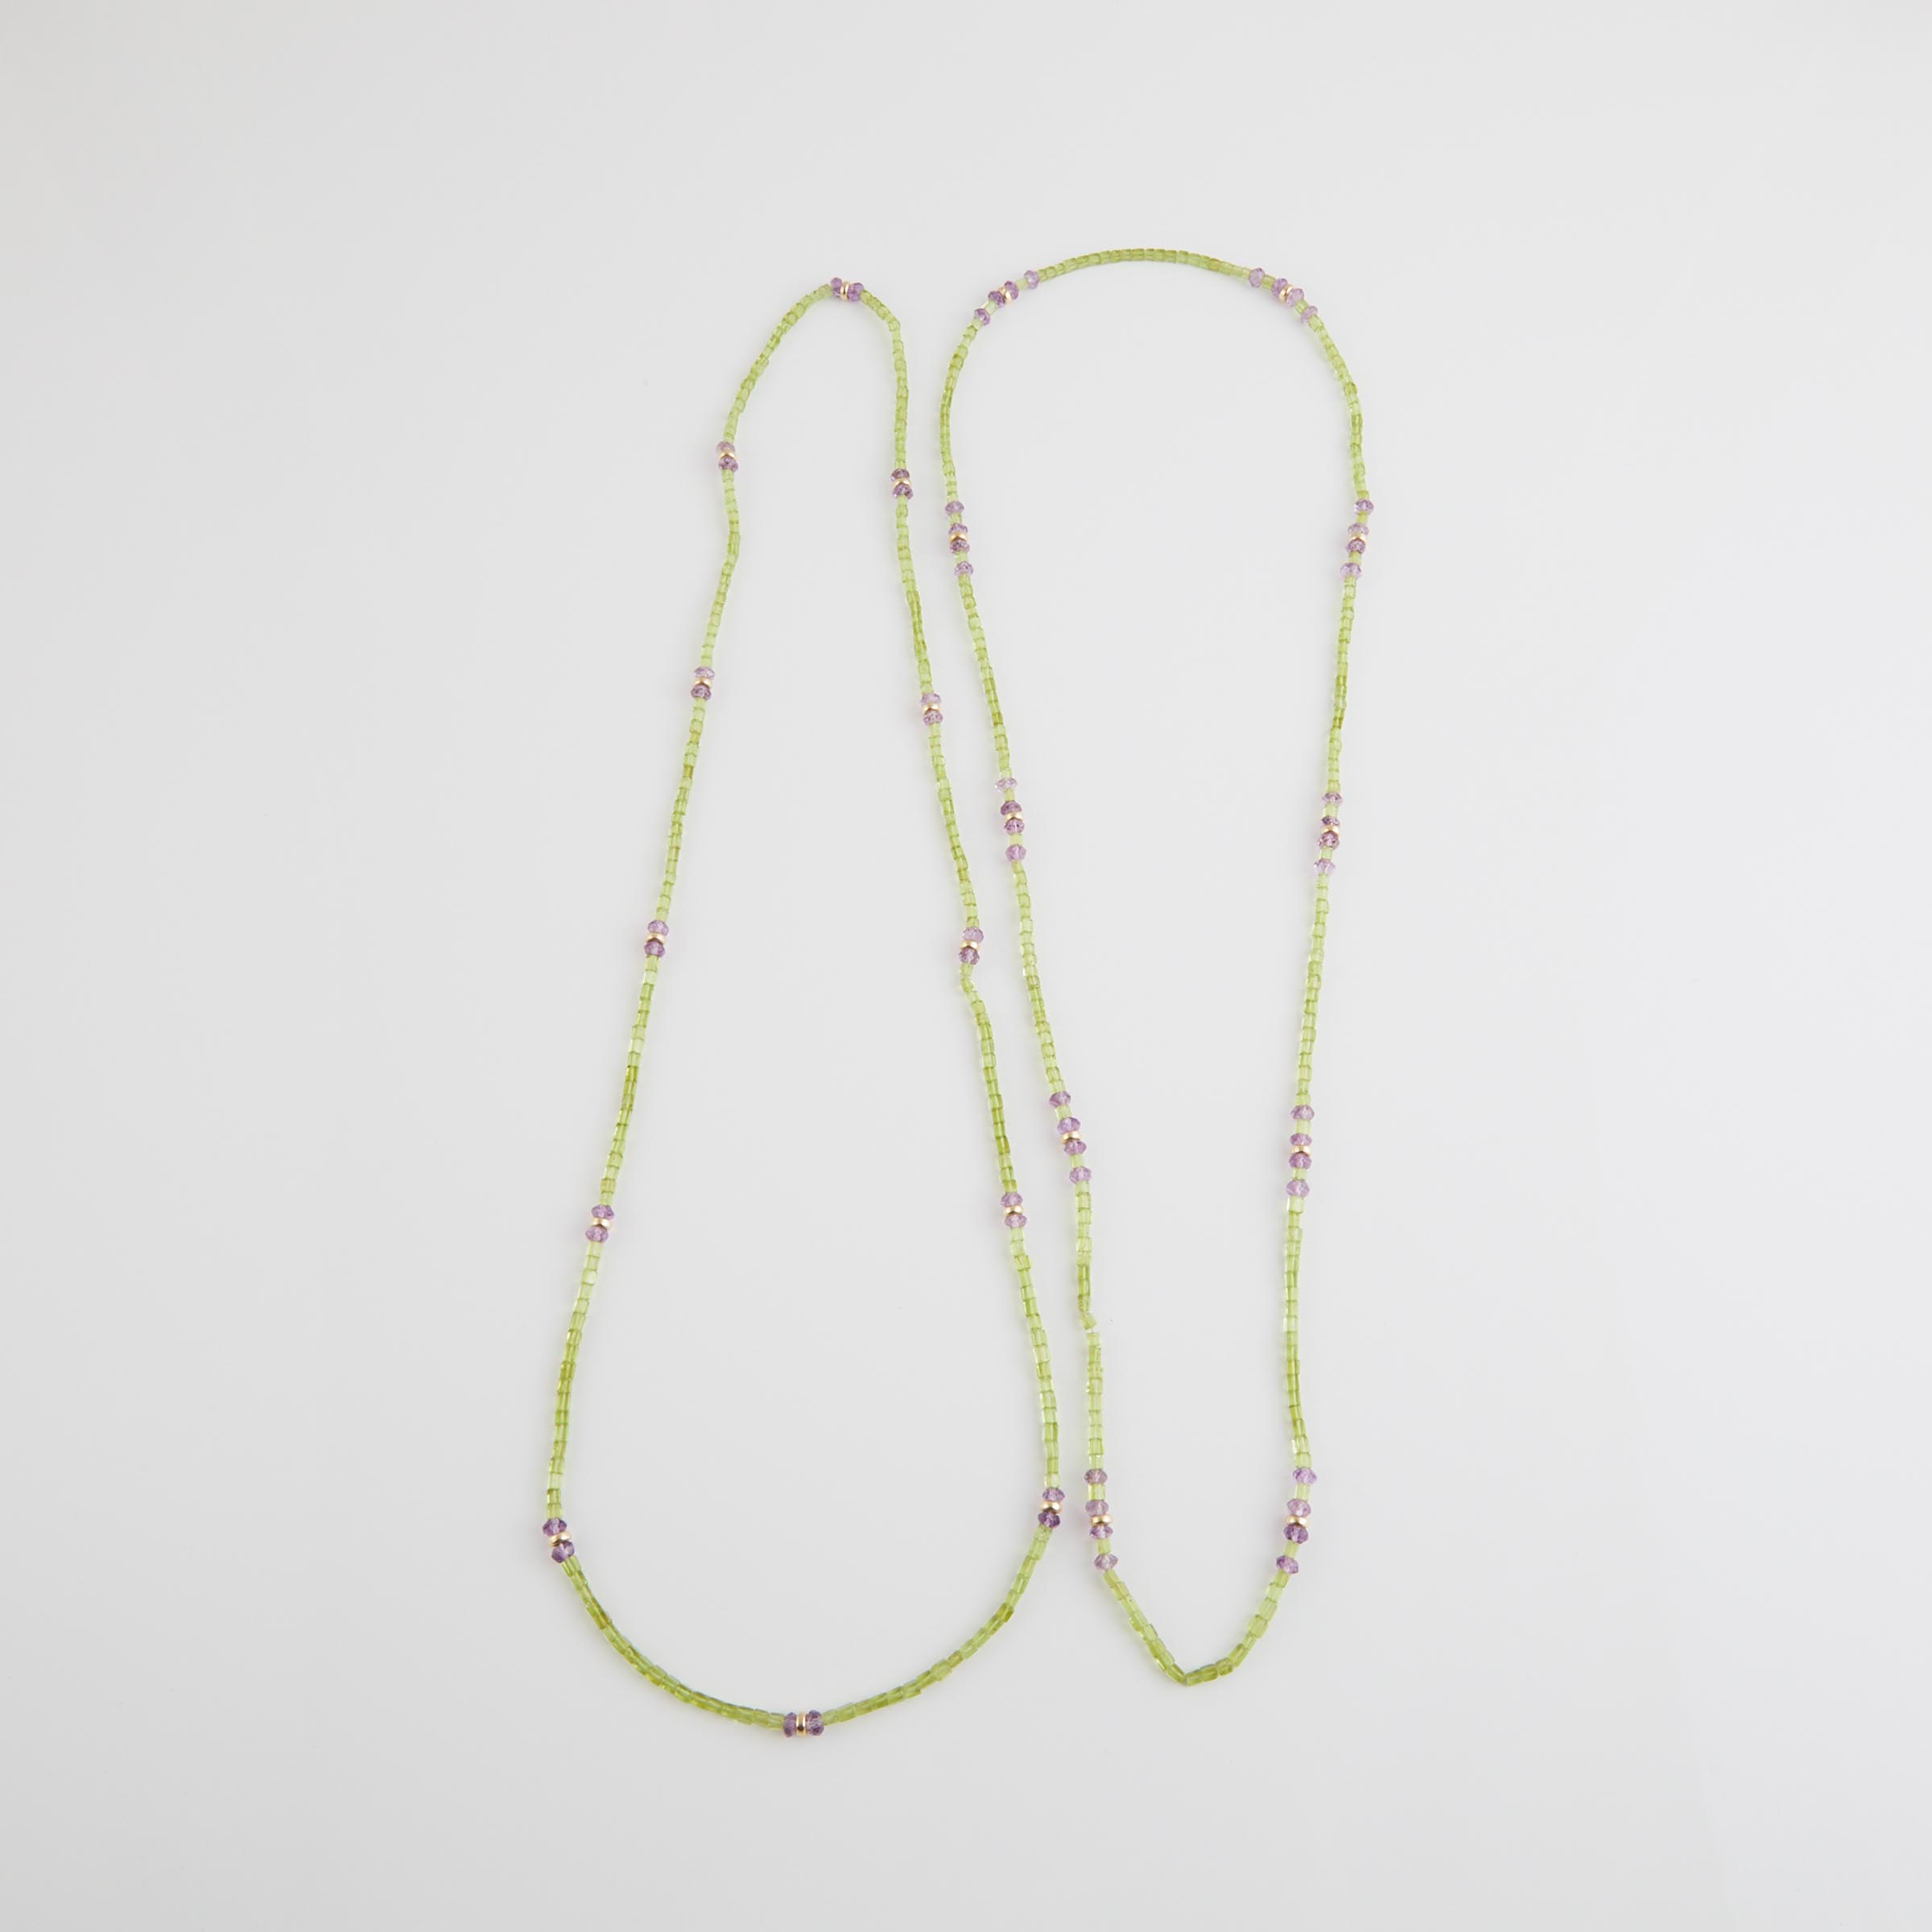 2 Peridot Rectangular Bead Endless Necklaces